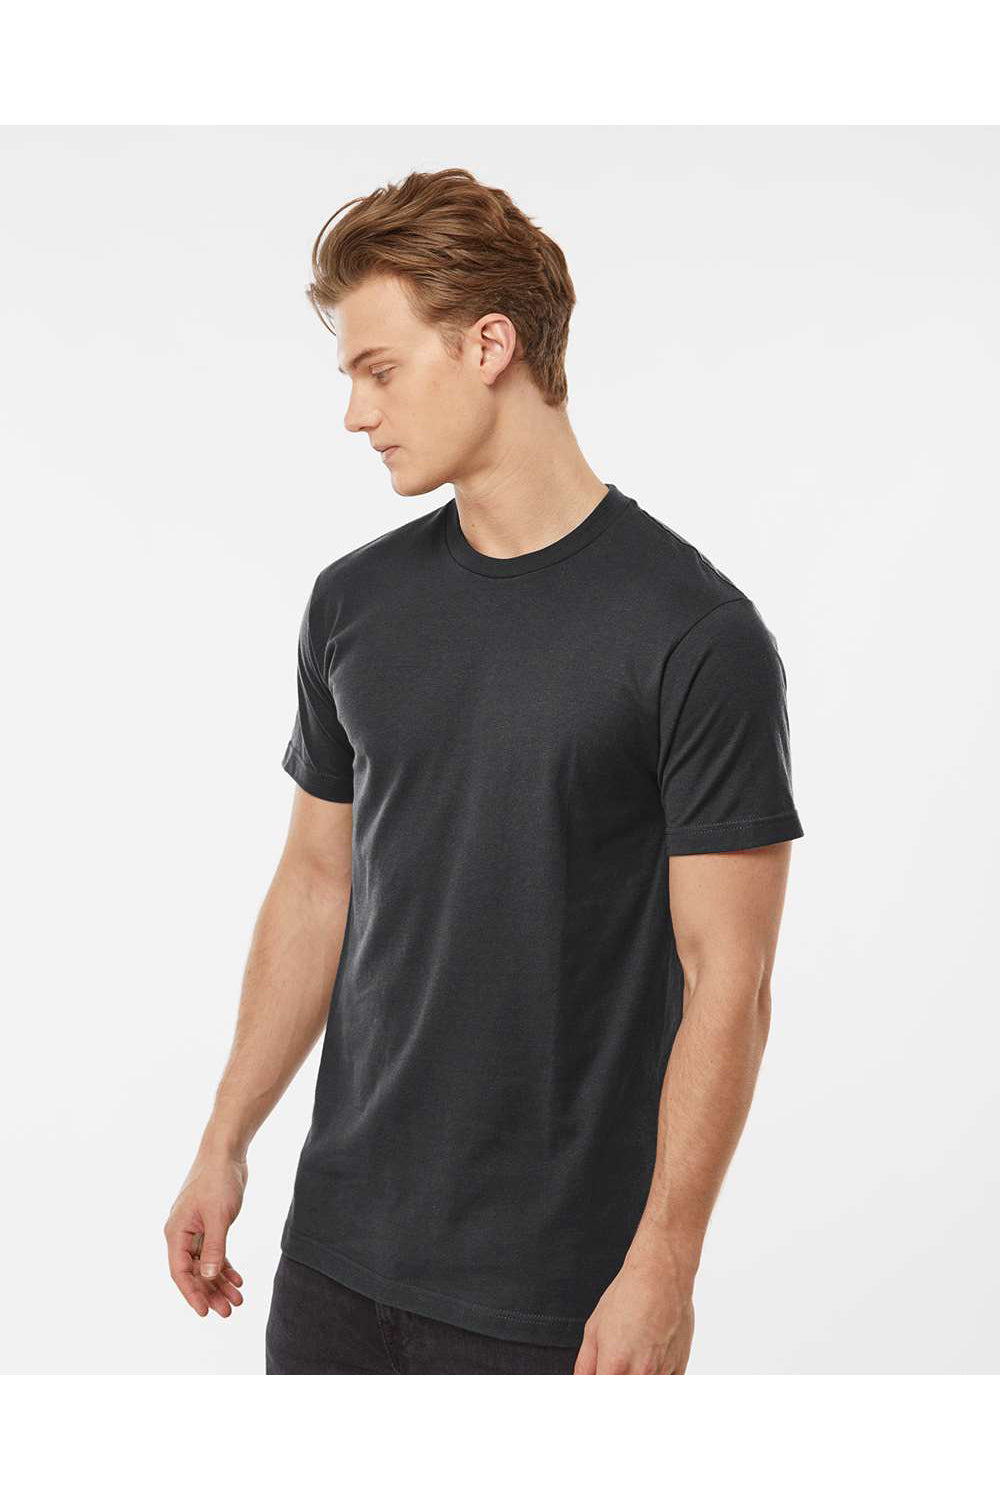 Tultex 202 Mens Fine Jersey Short Sleeve Crewneck T-Shirt Coal Grey Model Side